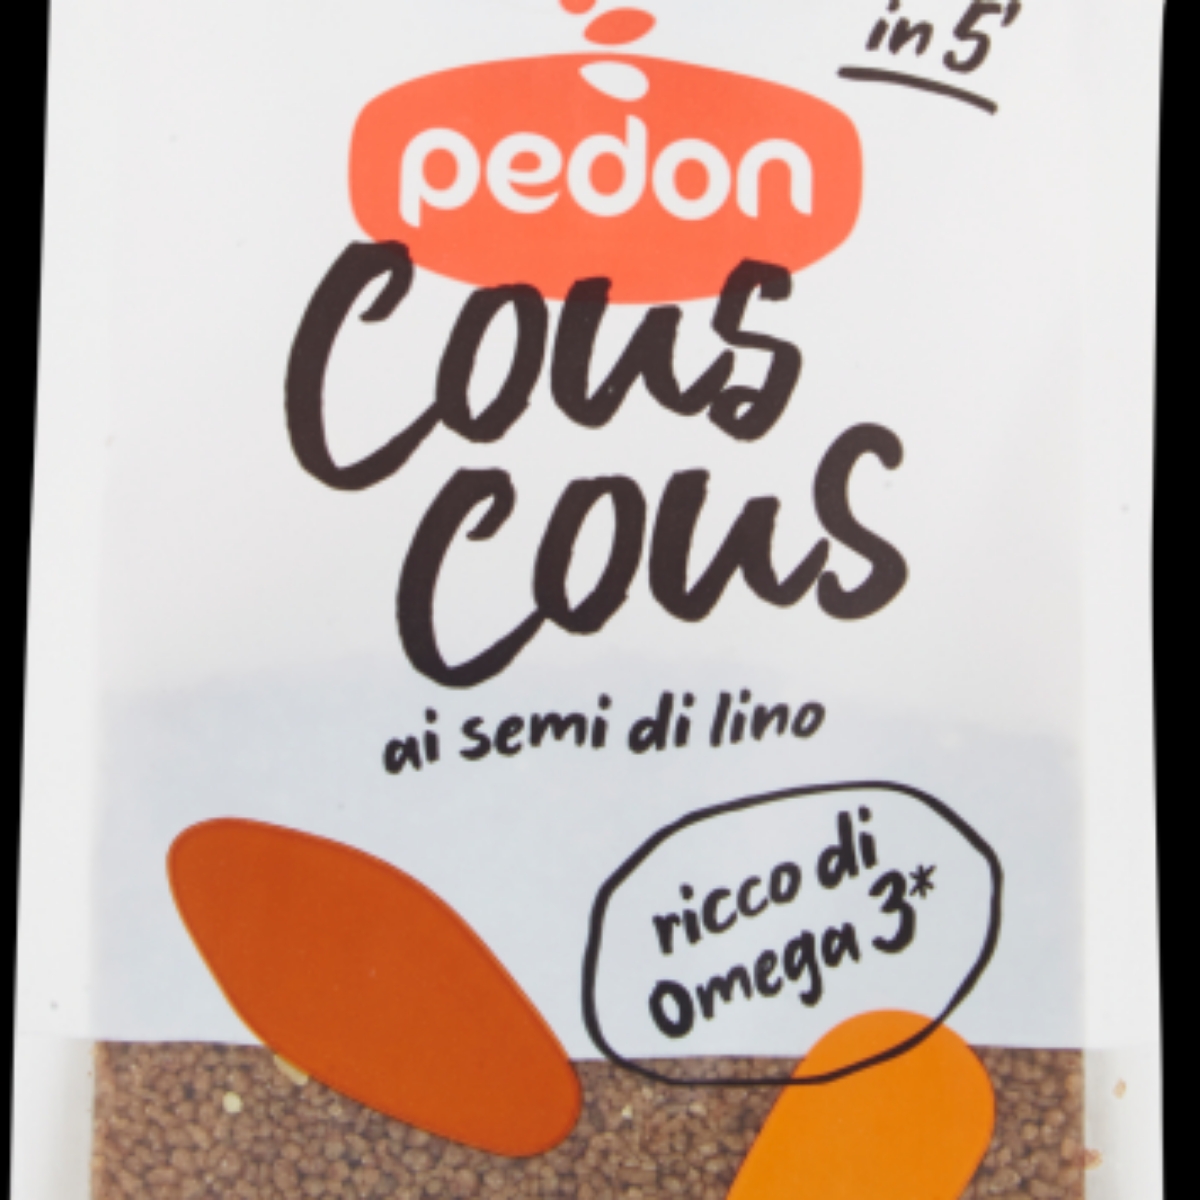 Pedon Cous cous semi di lino Reviews | abillion